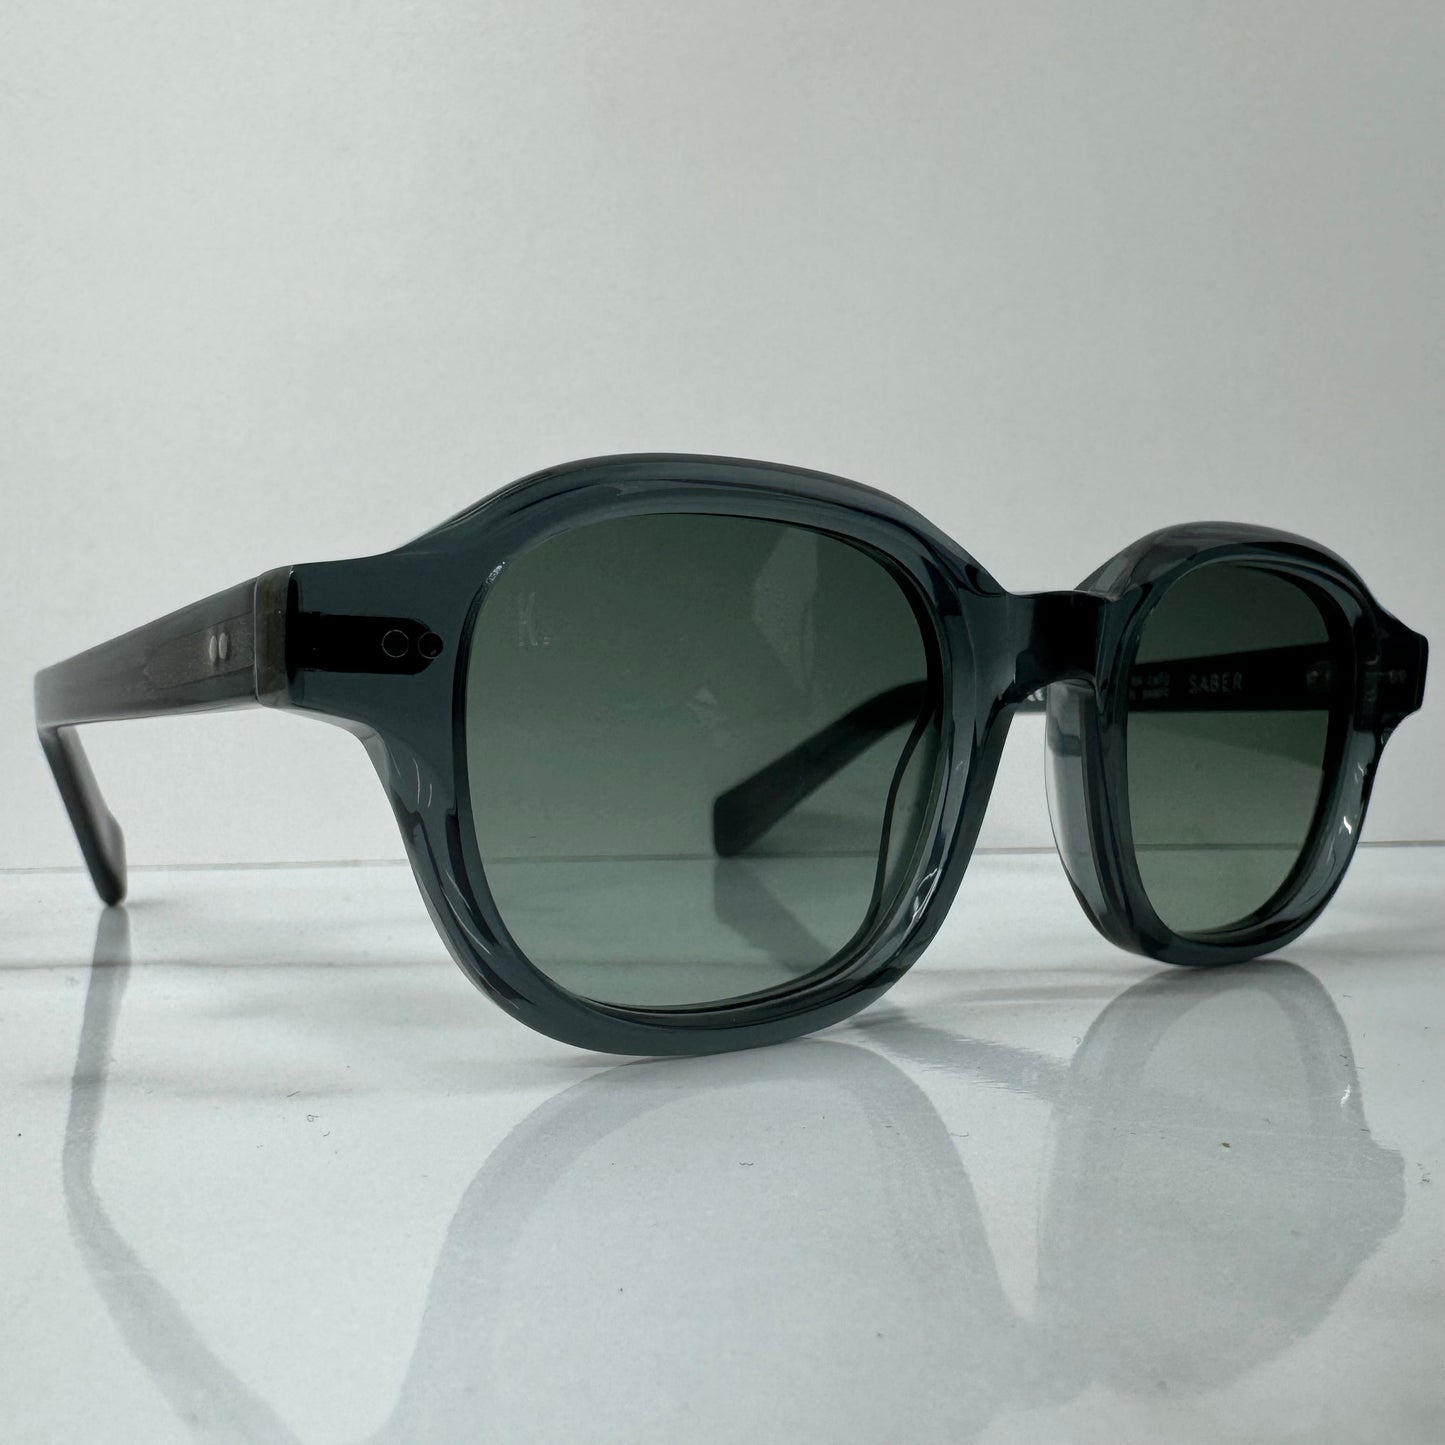 Kaleos Saber Sunglasses CAT2 Transparent Grey & Green Tinted Round Acetate